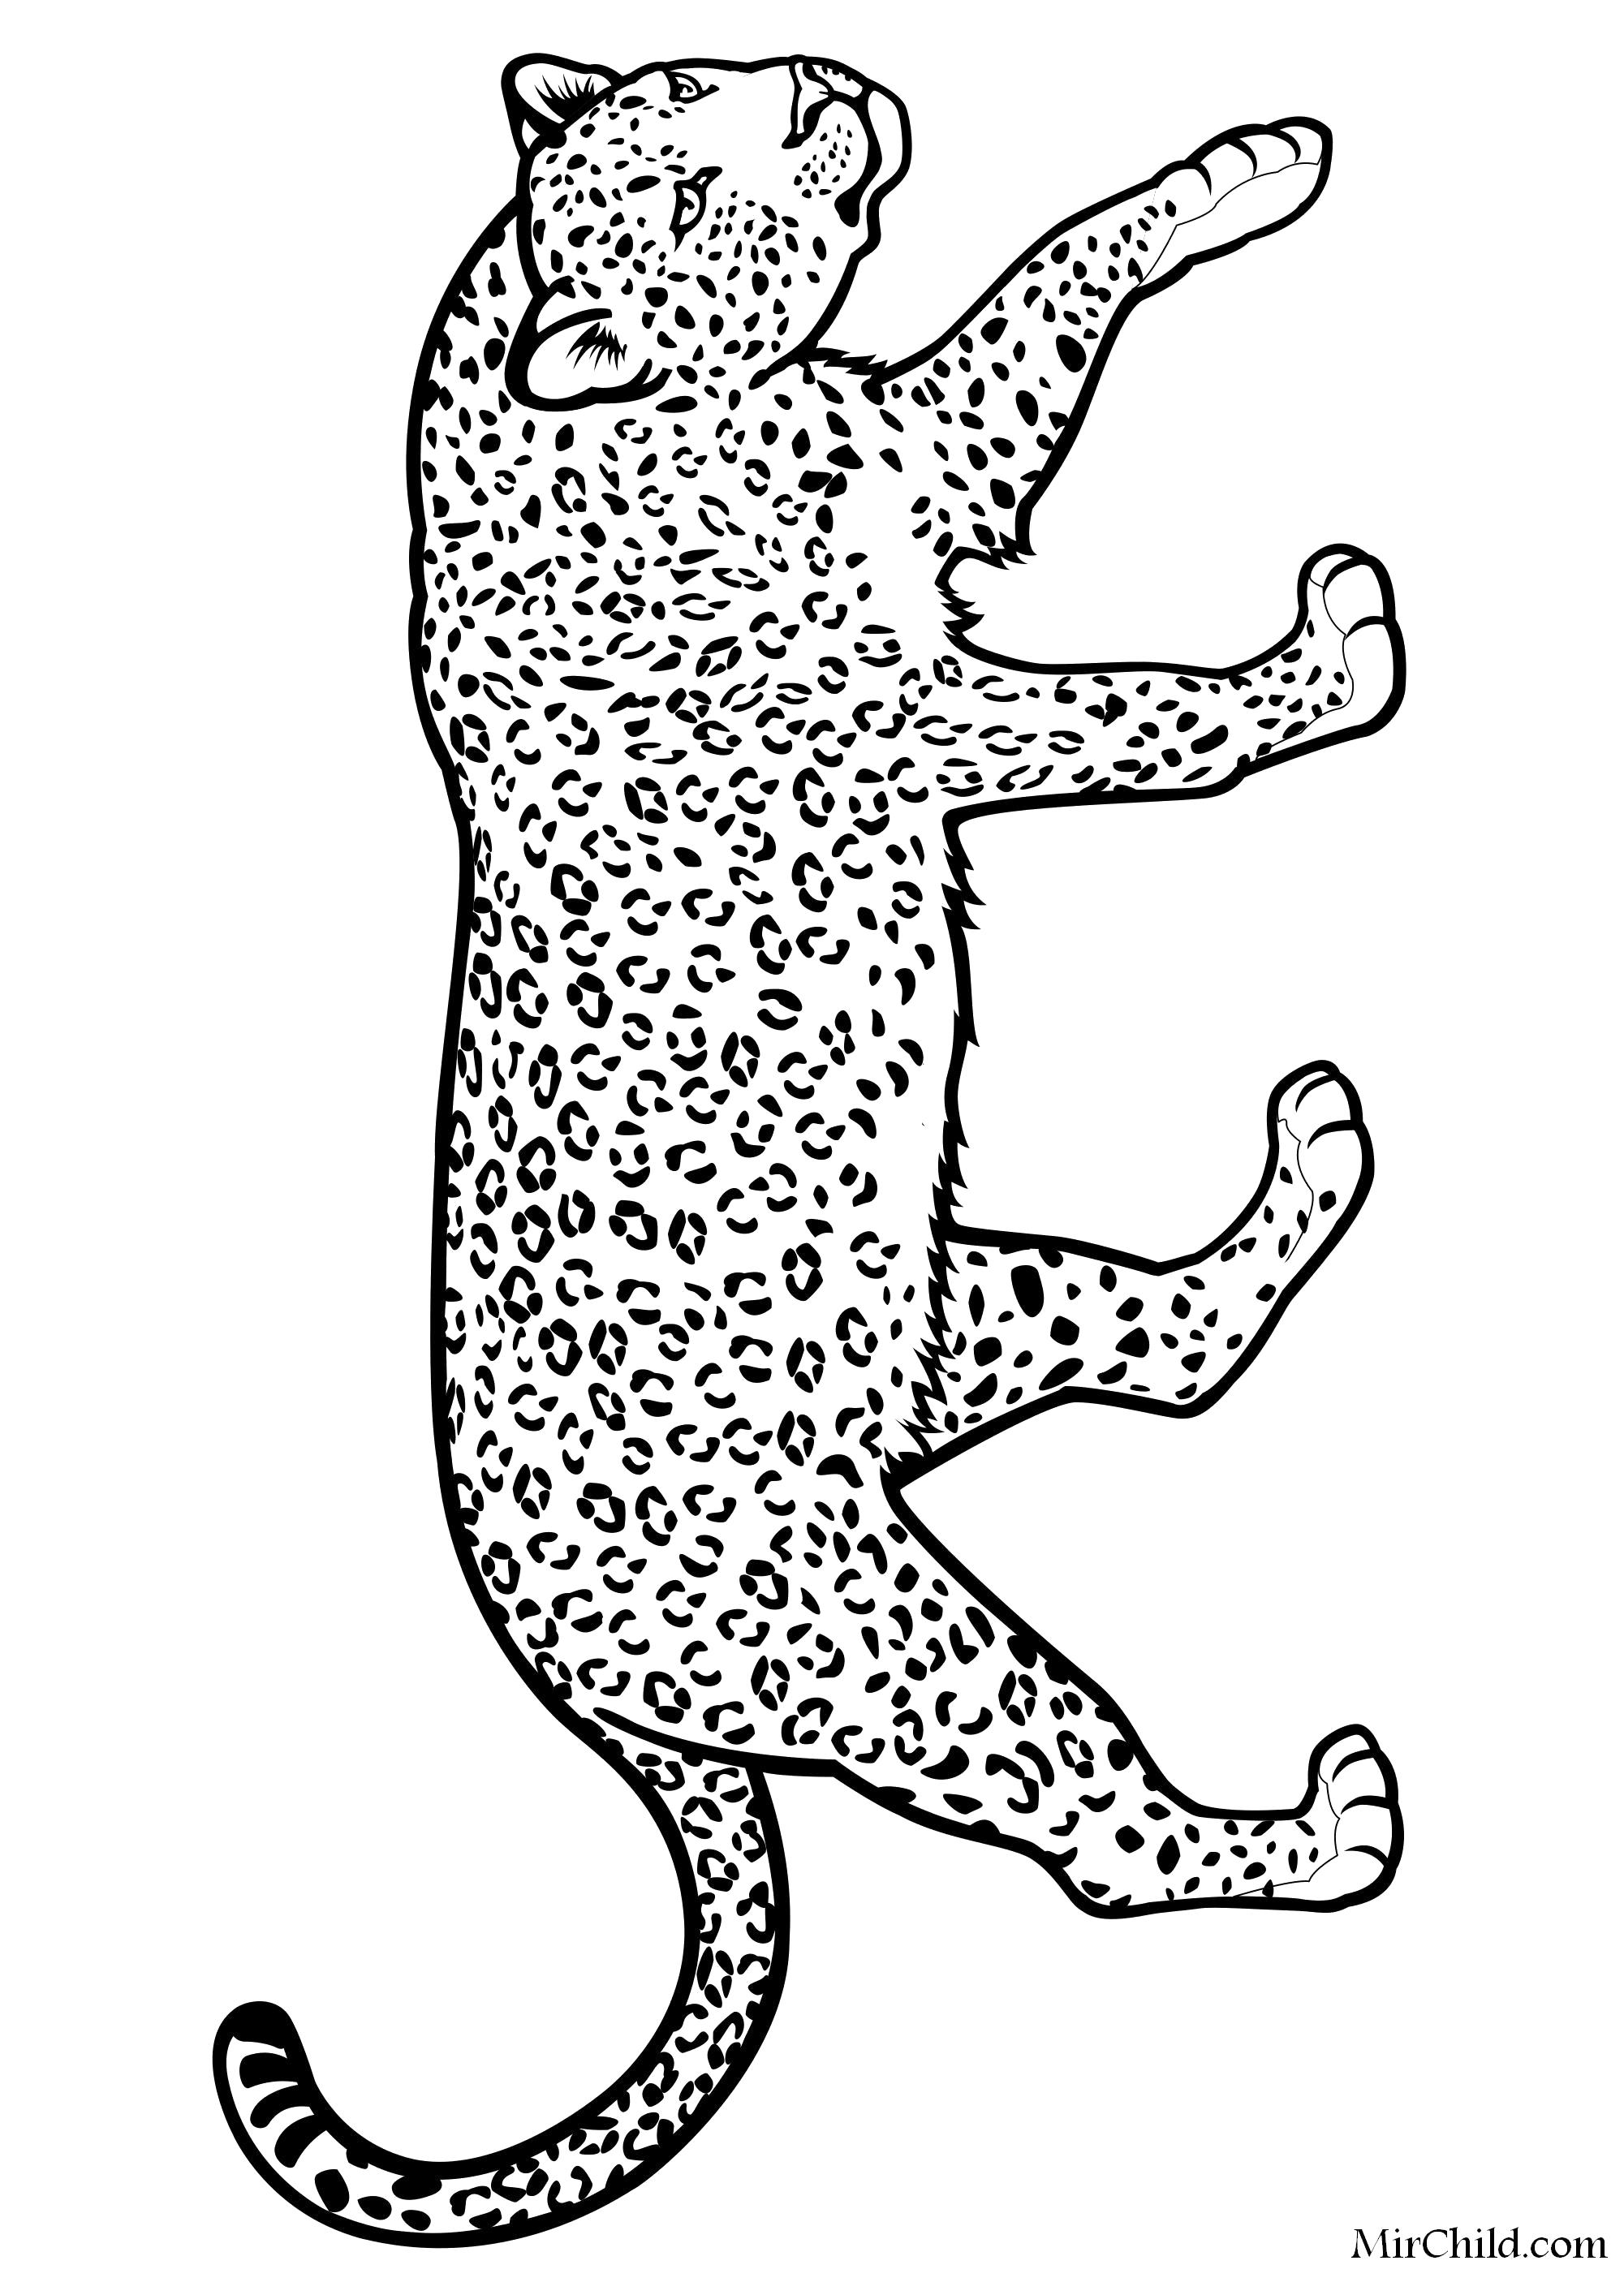 Раскраска  Леопард. Скачать леопард.  Распечатать леопард